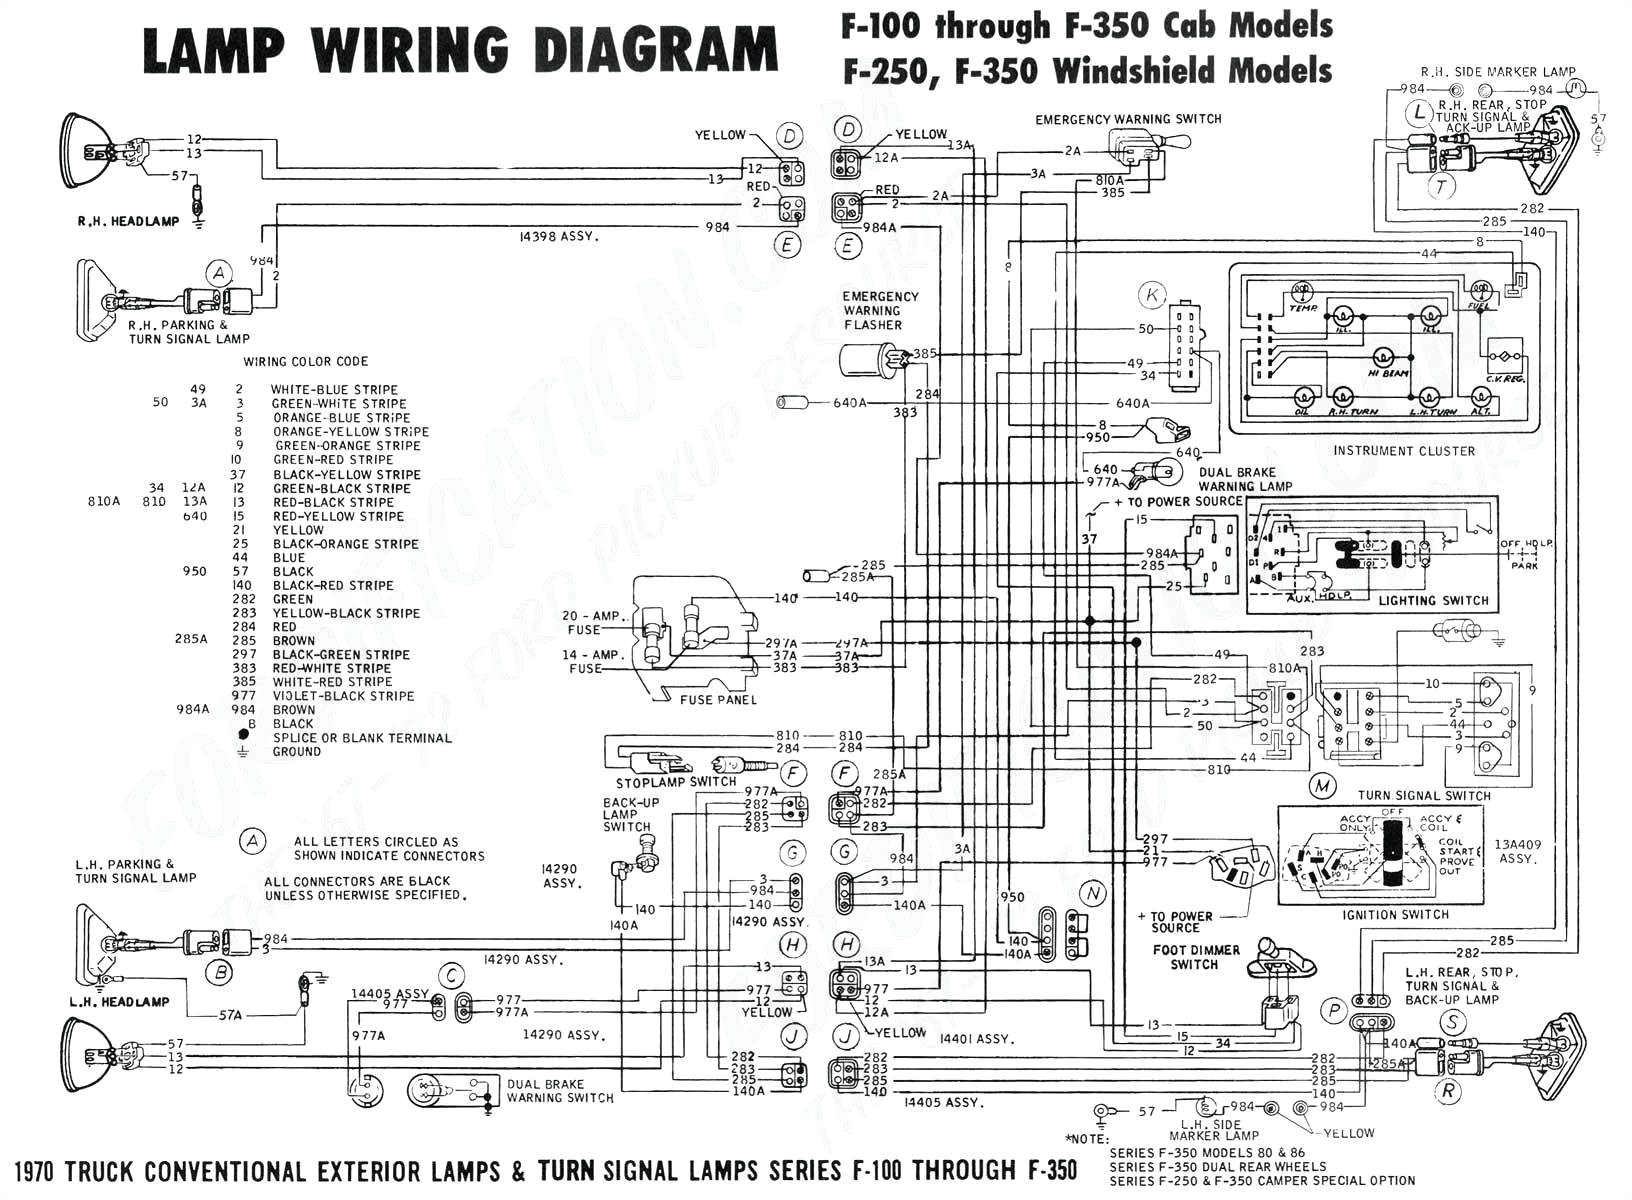 wabco vcs ii wiring diagram